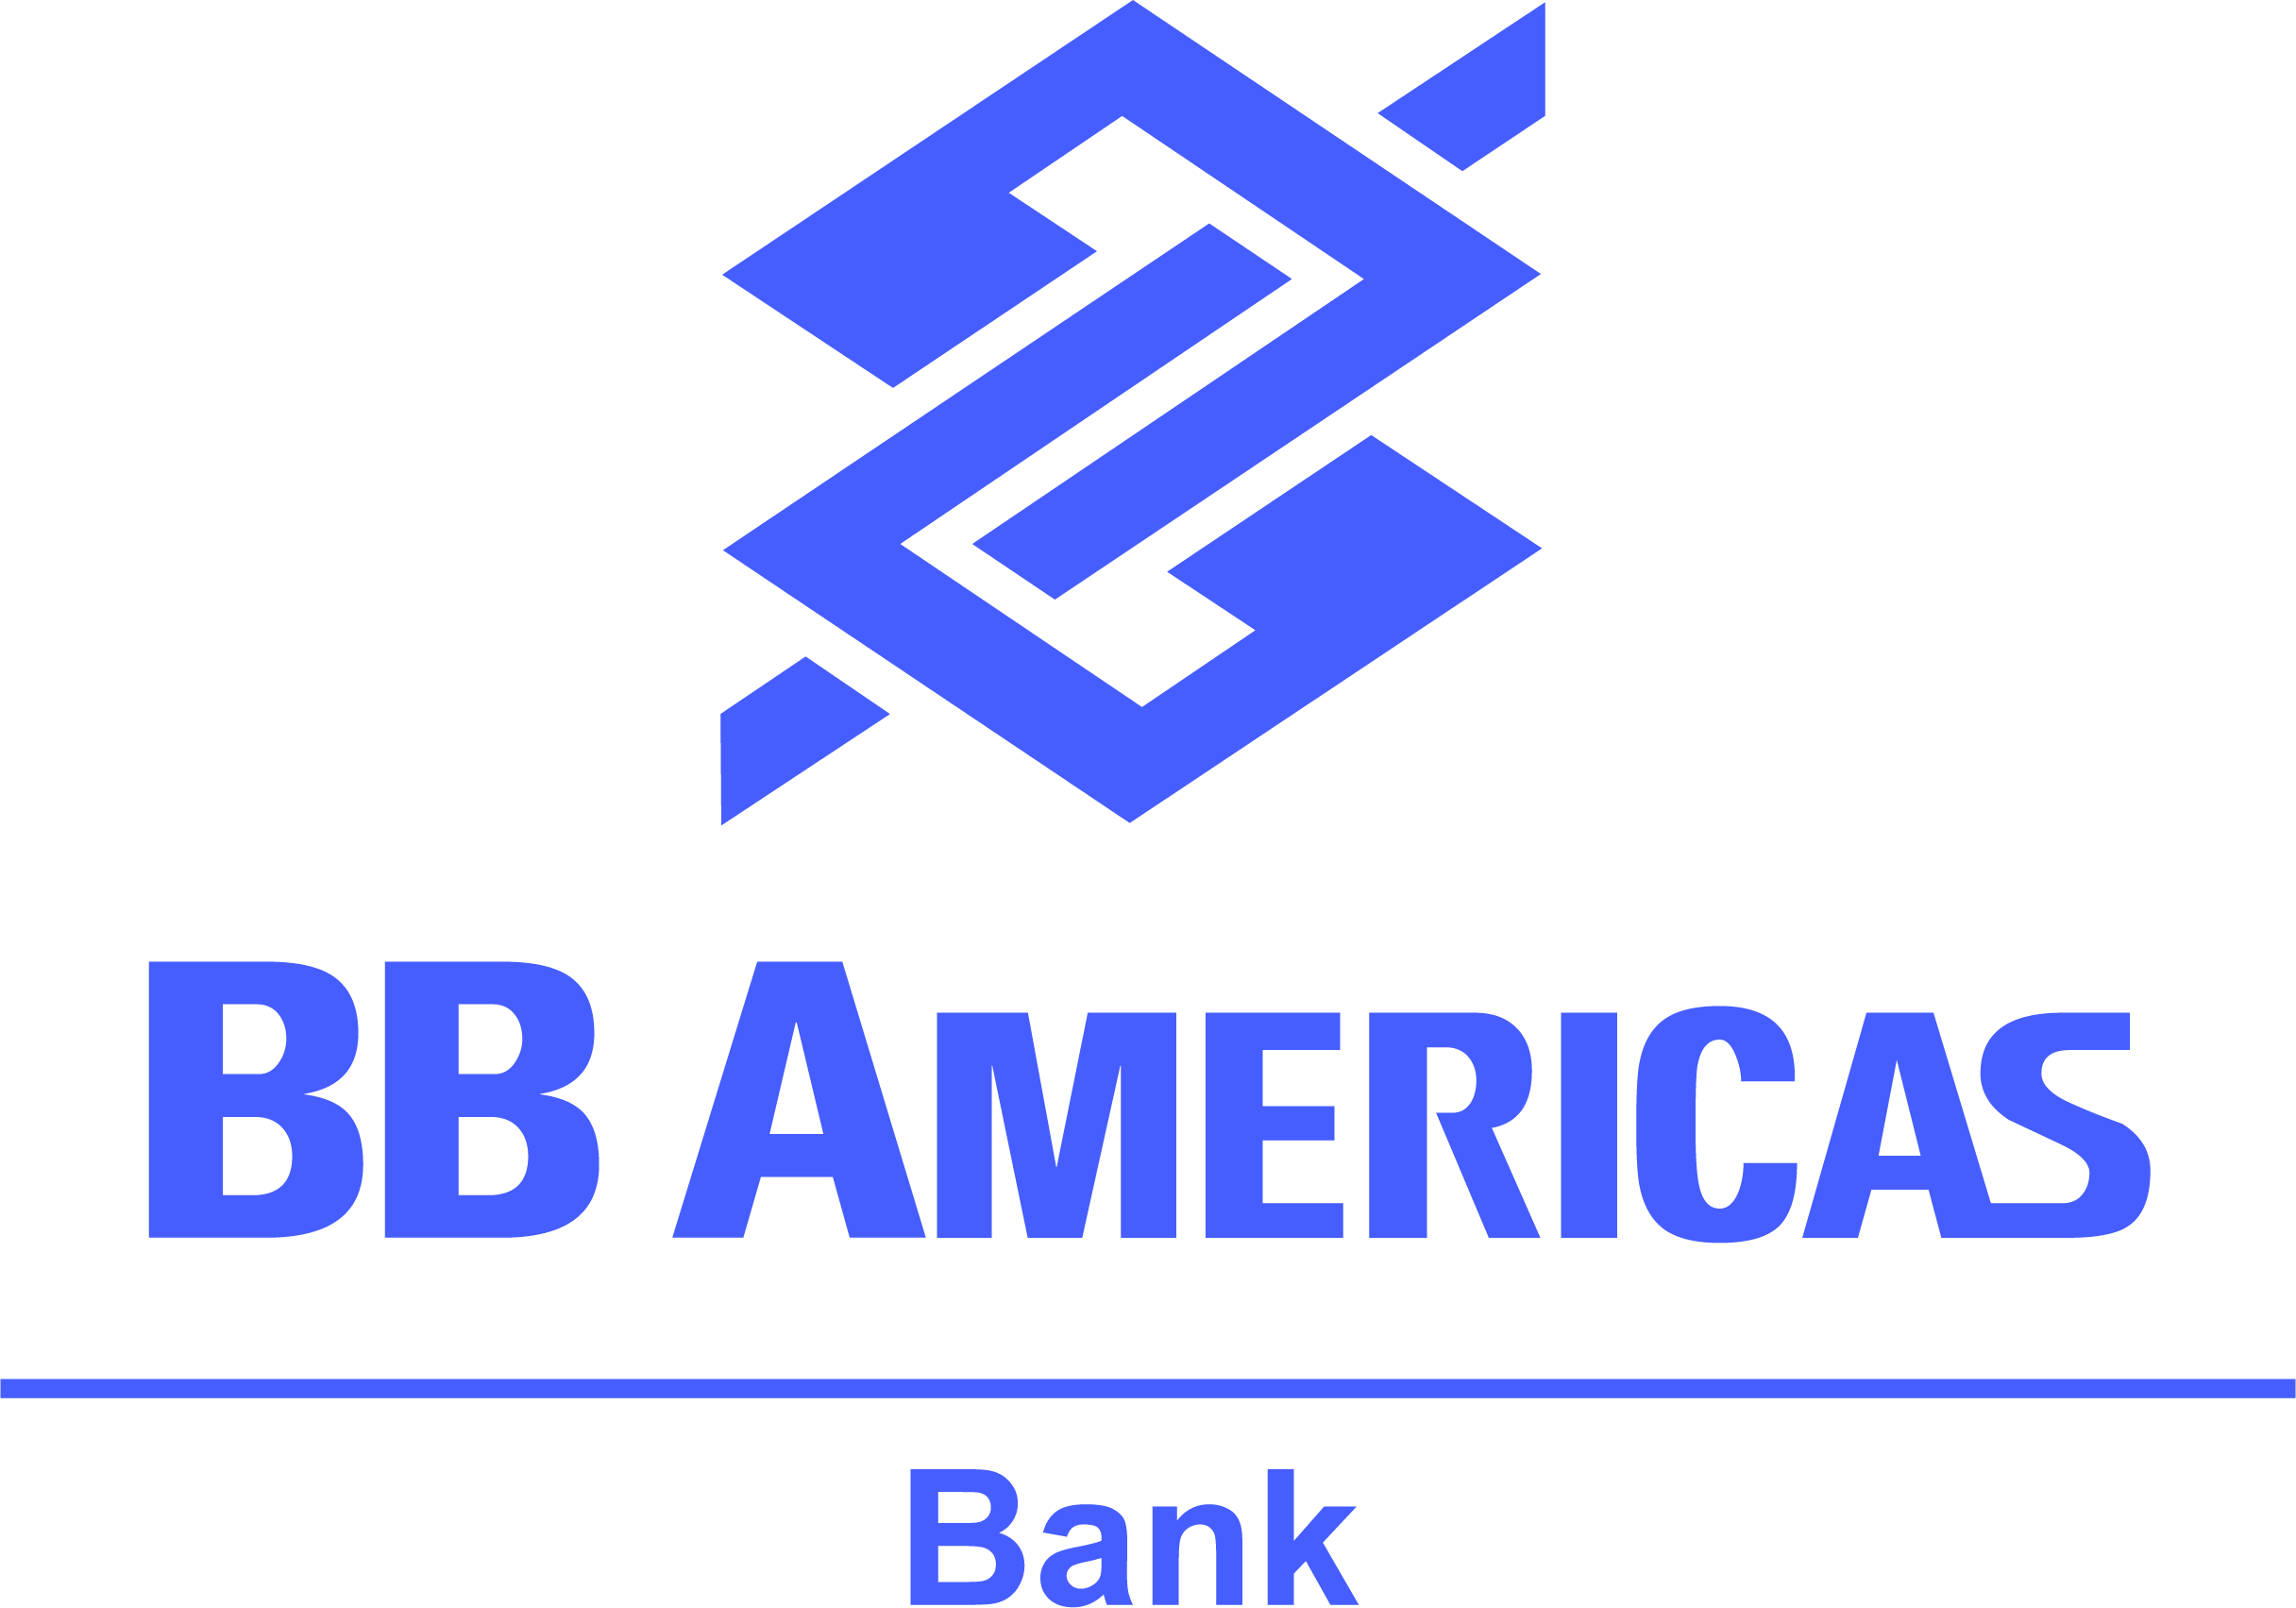 BB Americas Bank